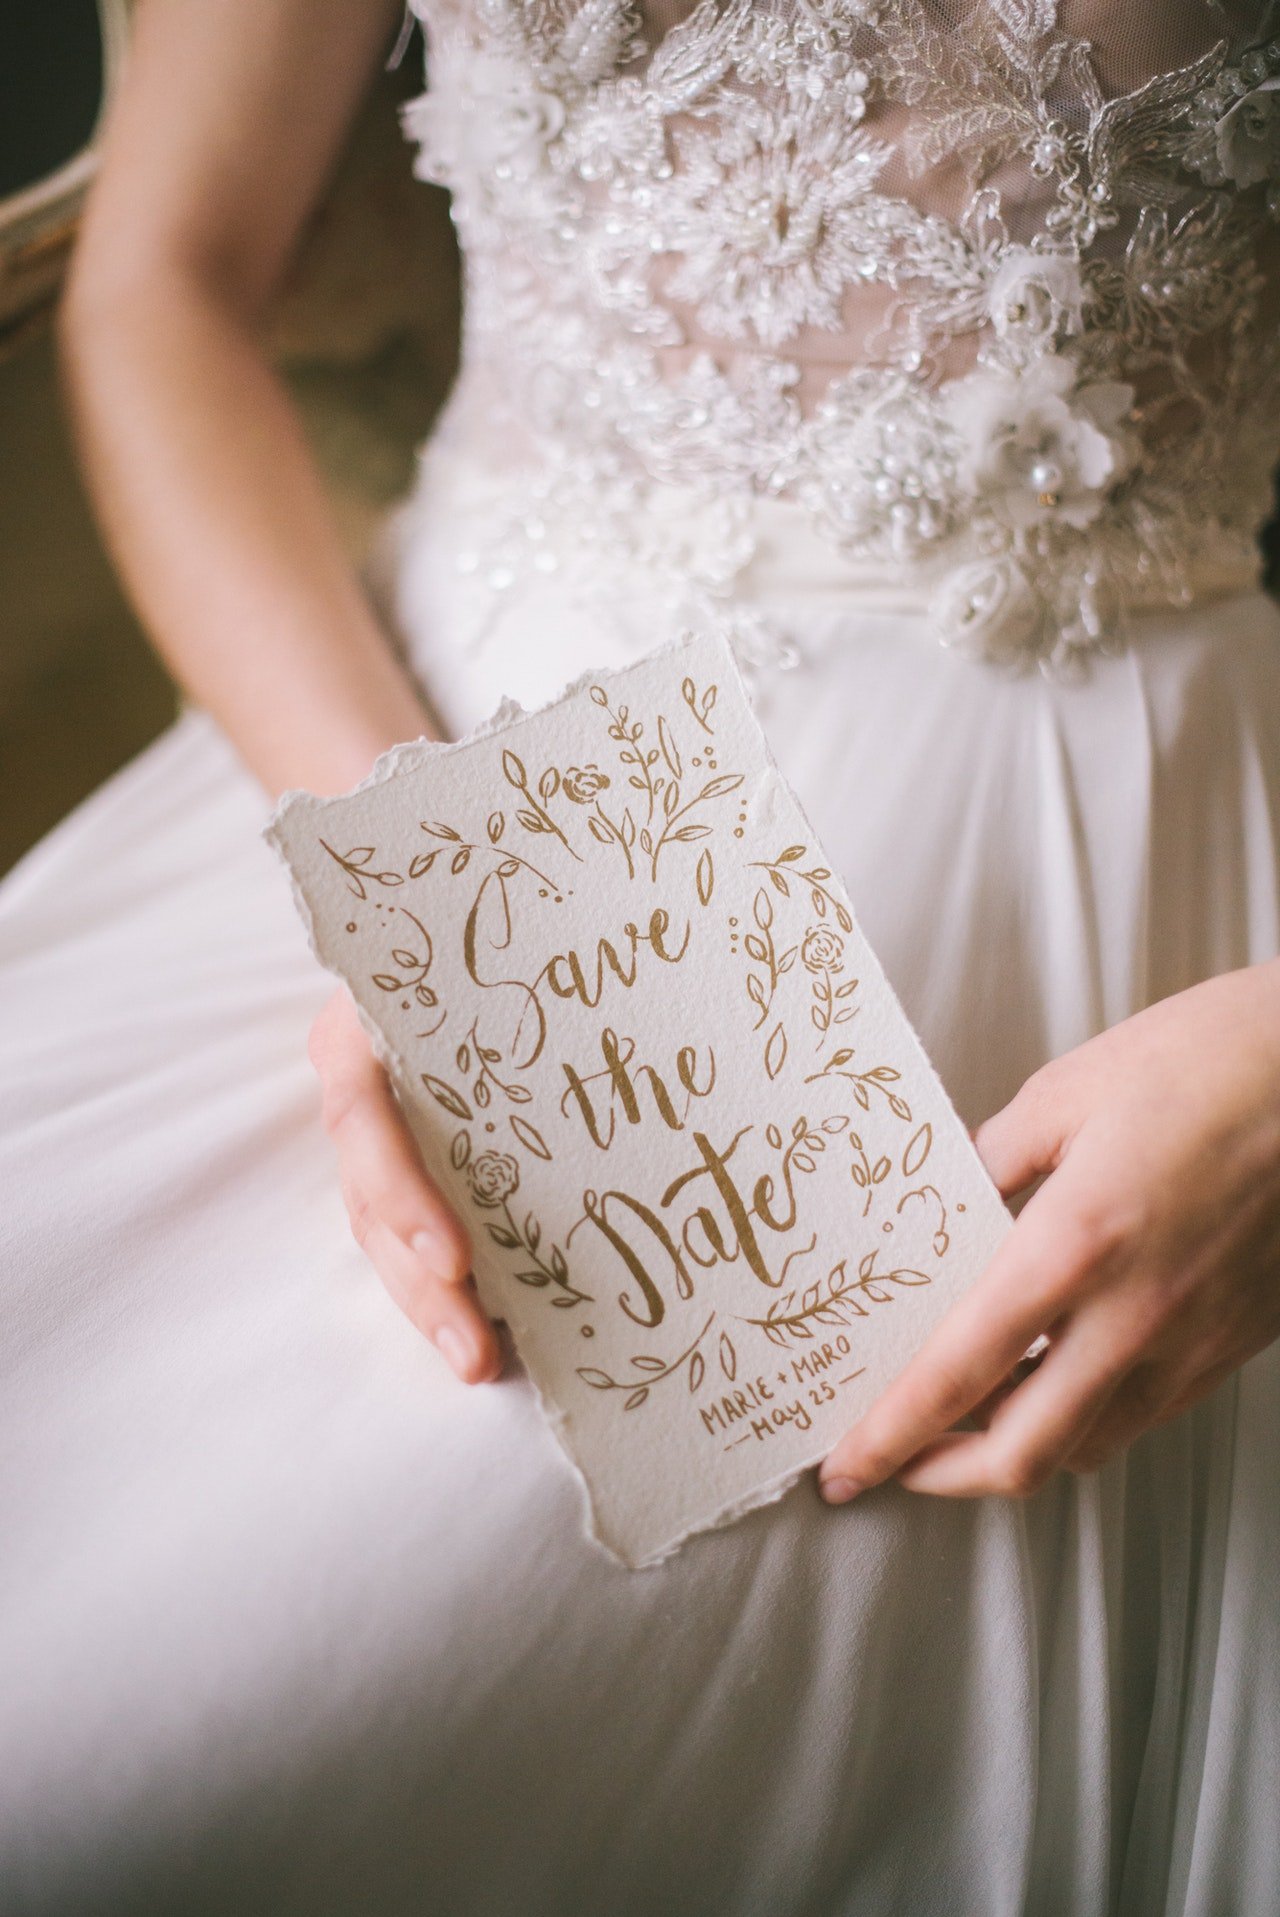 Bride holding wedding invitation card | Source: Pexels